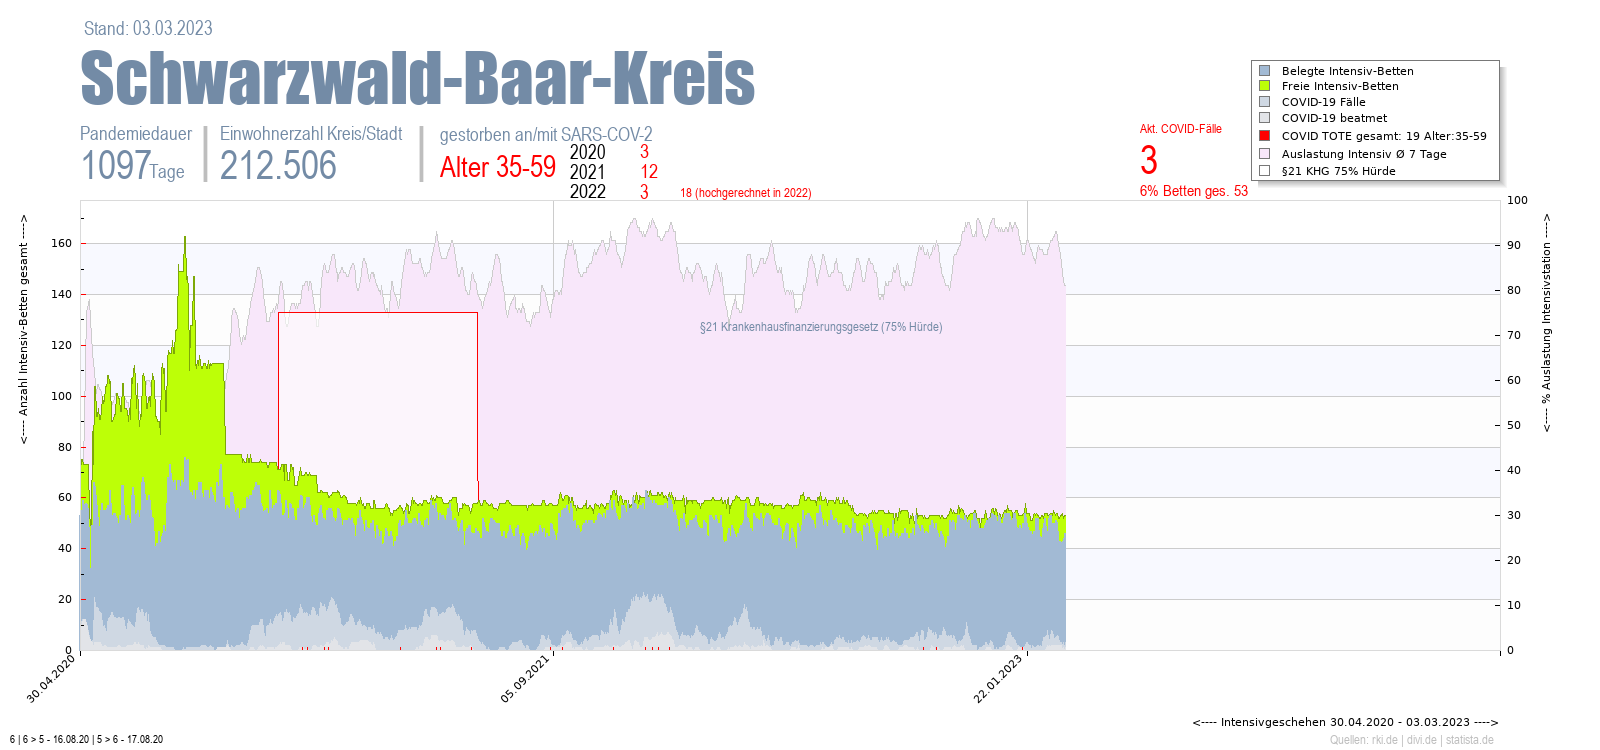 Intensivstation Auslastung Schwarzwald-Baar-Kreis Alter 0-4